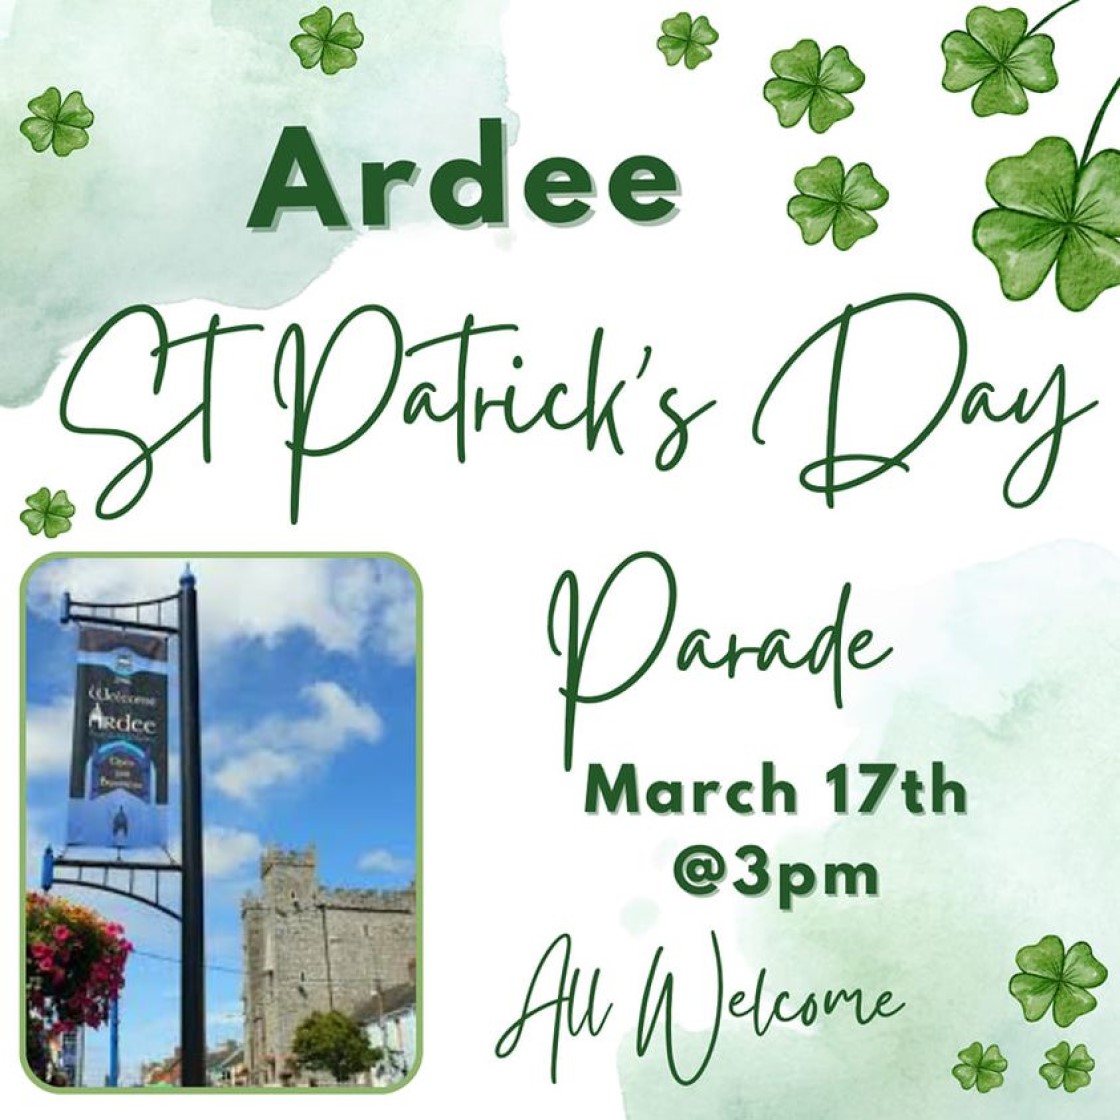 Ardee St Patrick's Day Parade